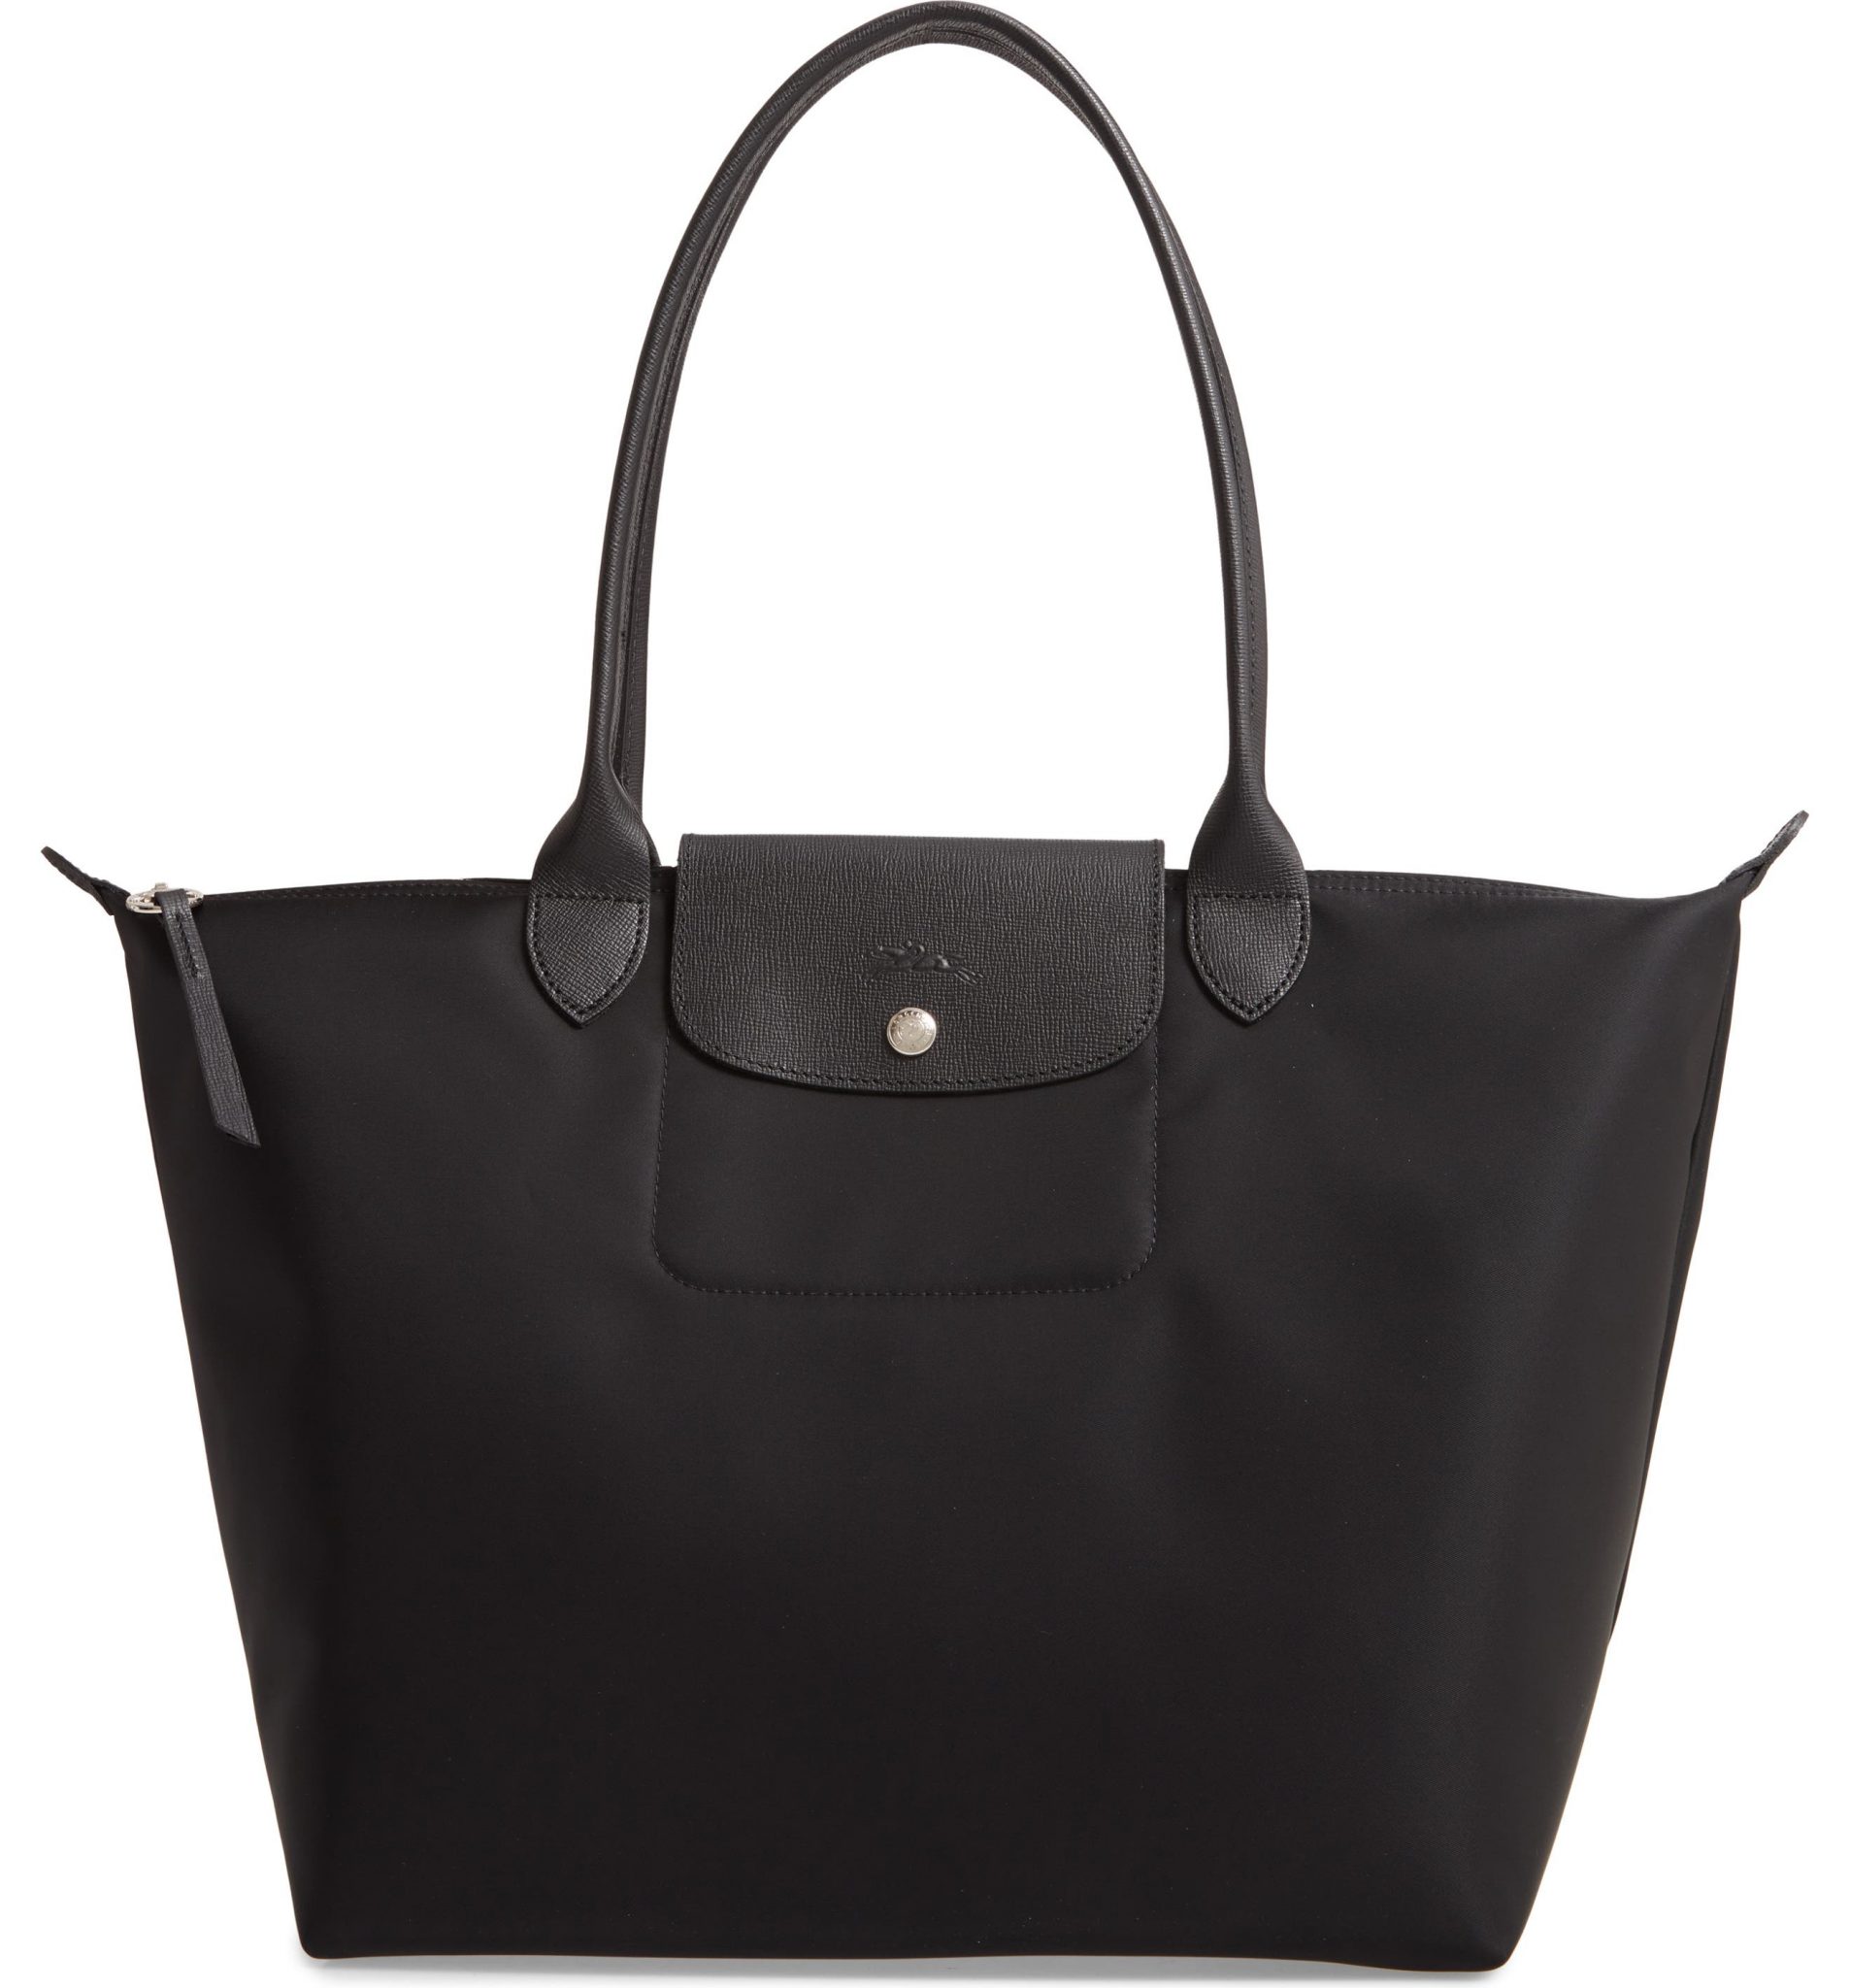 Oversized handbags for spring or summer: Go big or go home!